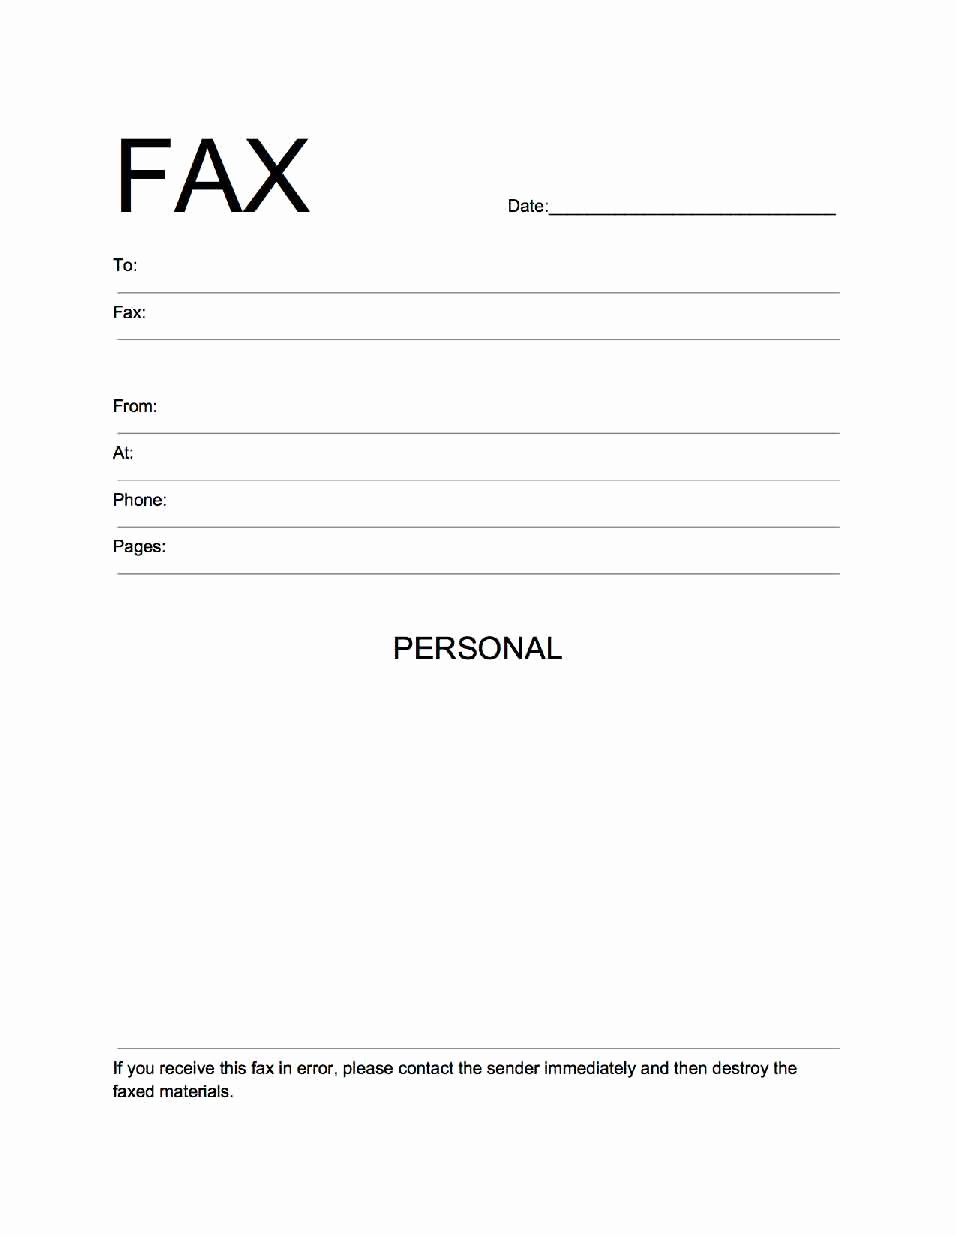 Fax Cover Sheet Sample Template Beautiful Free Fax Cover Sheet Template Download